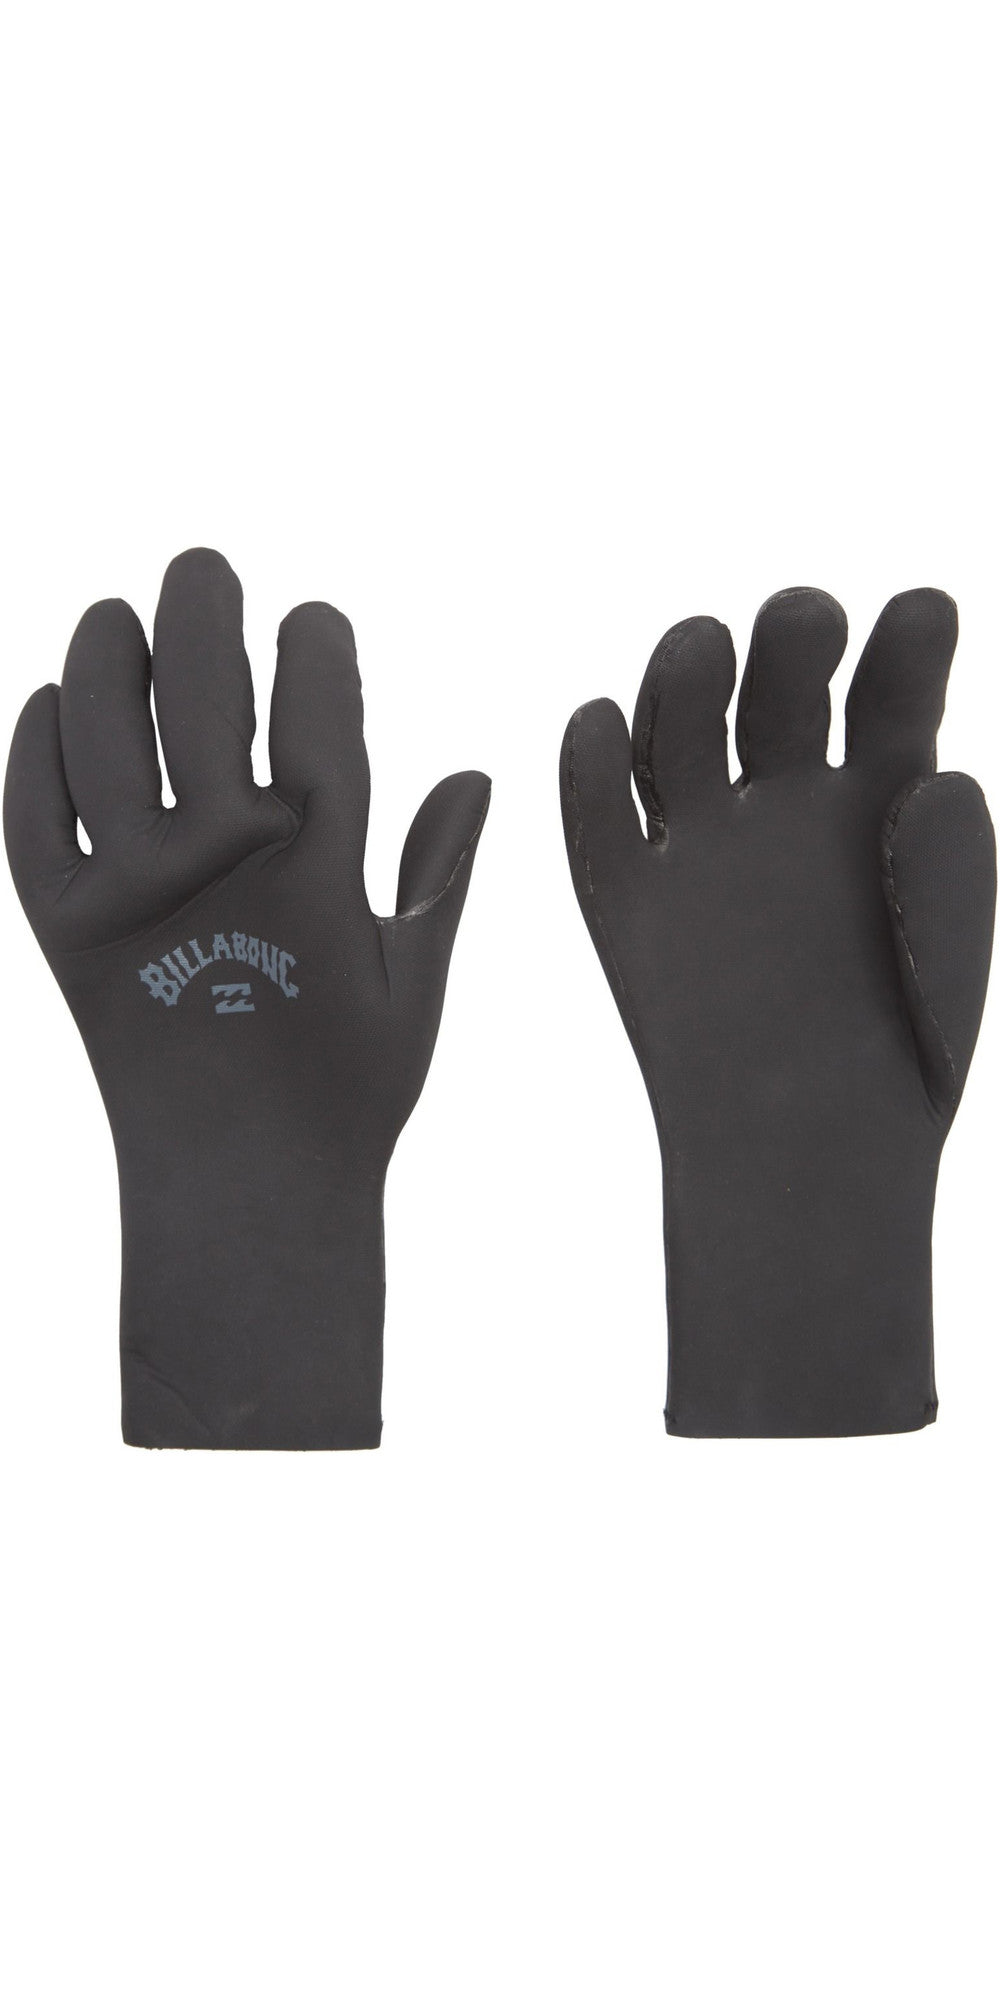 Billabong 2mm Absolute  - Wetsuit Gloves for Men